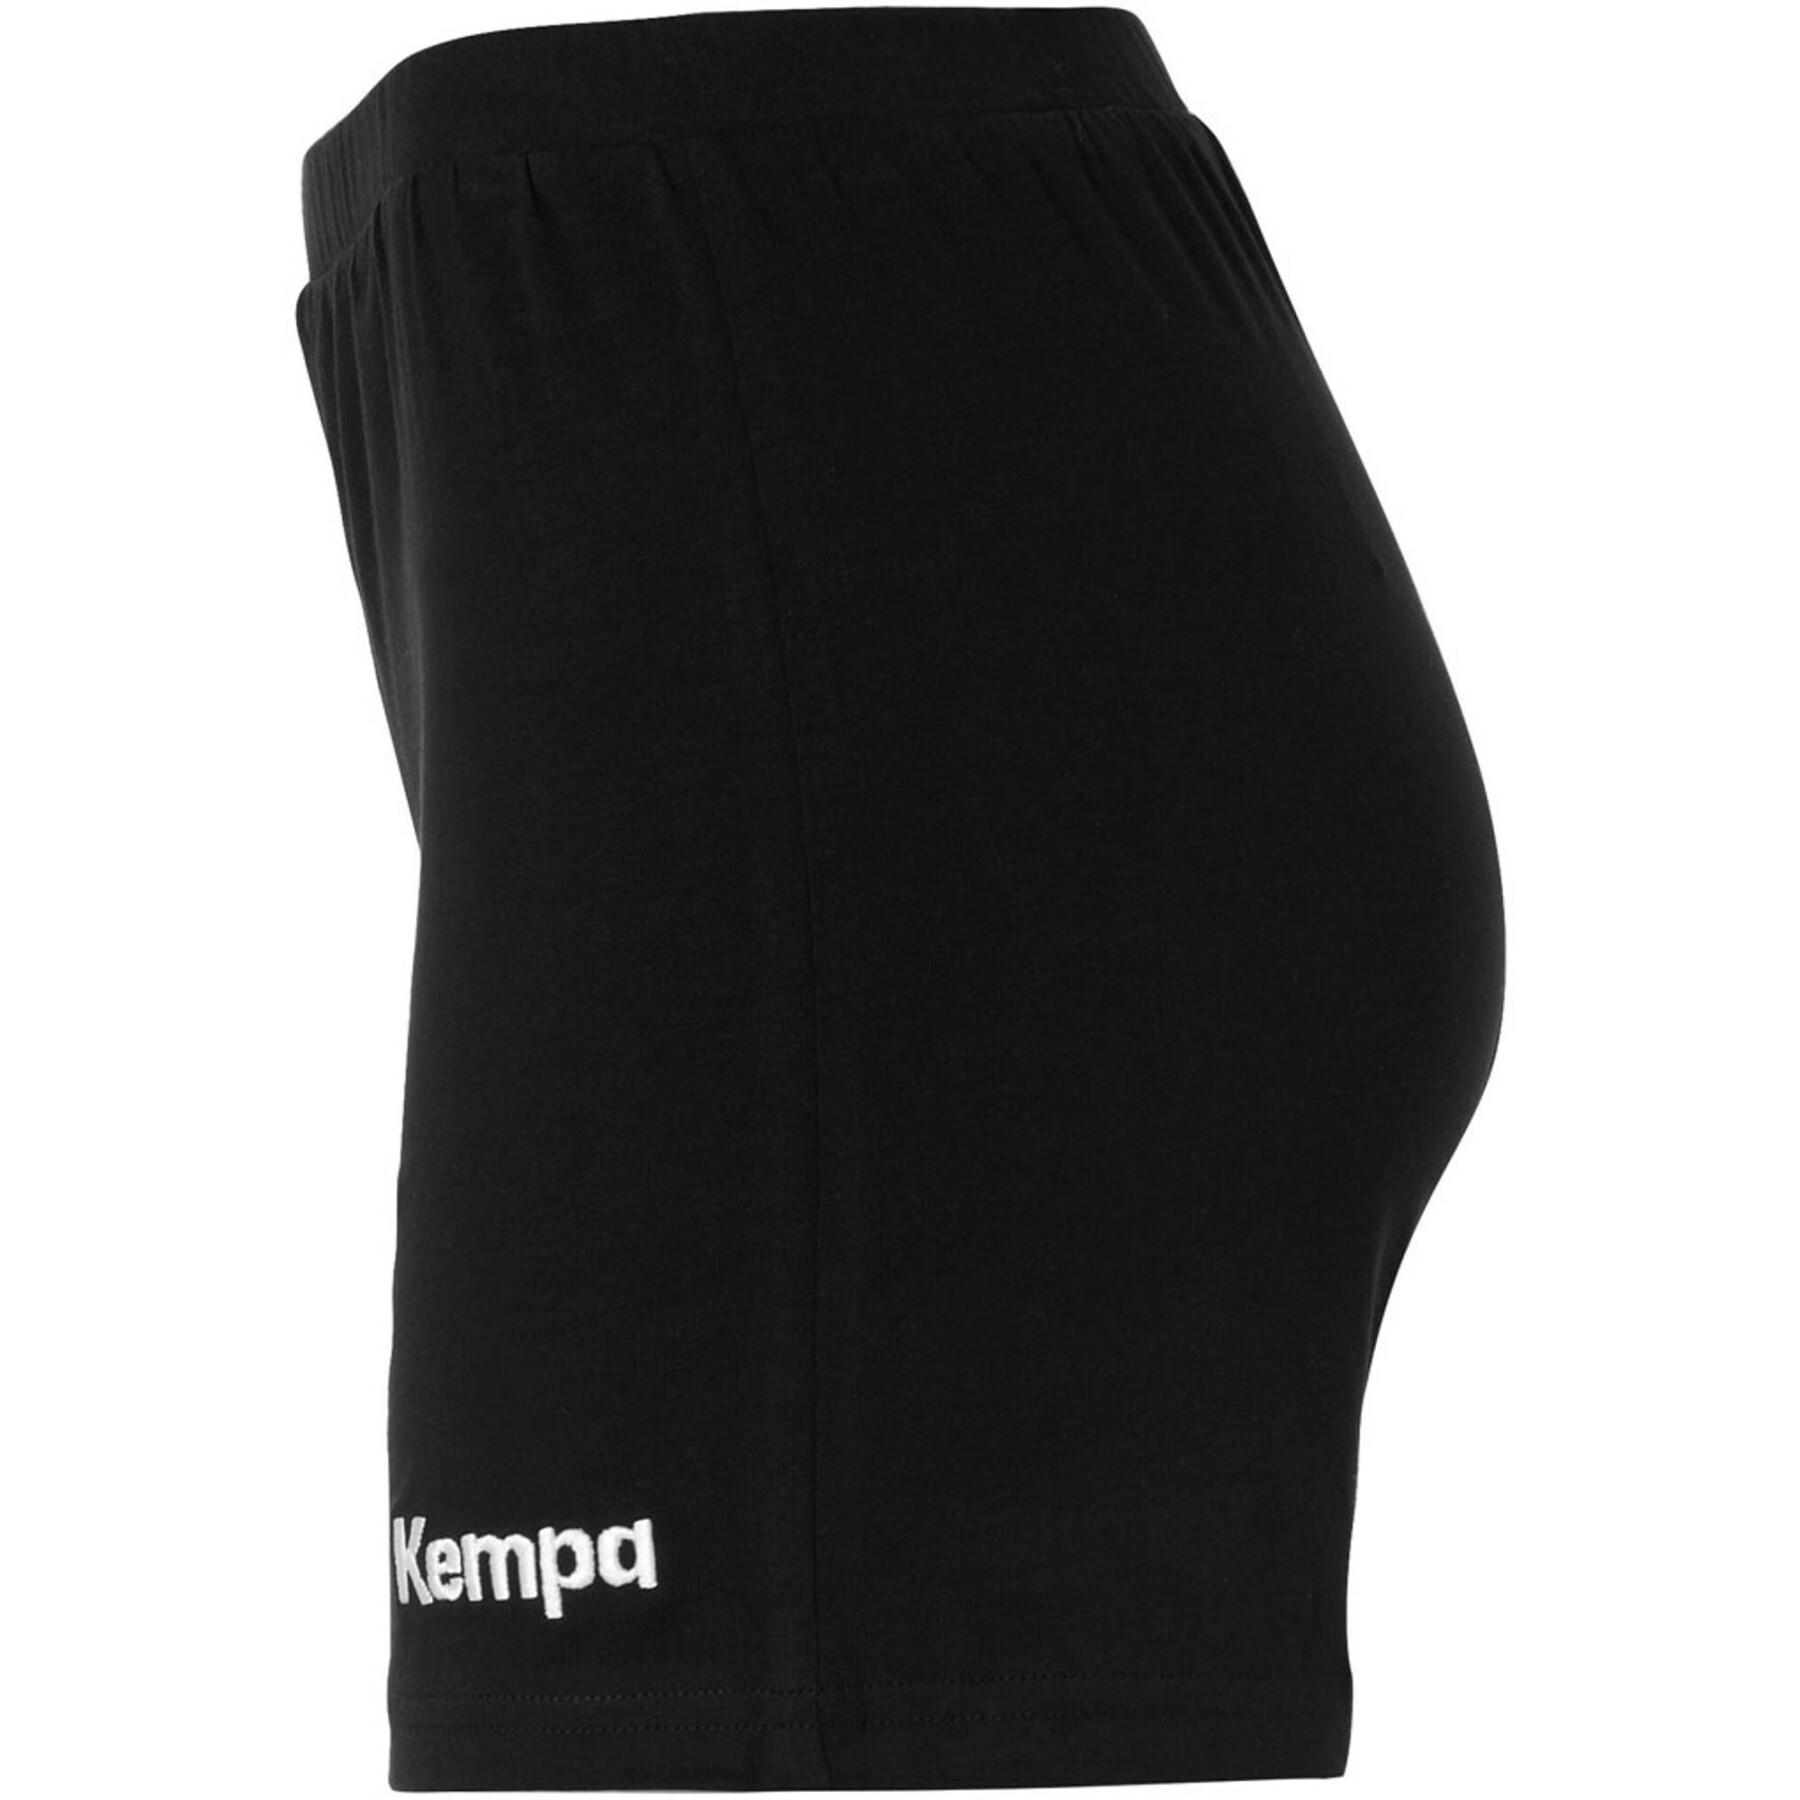 Women's shorts Kempa Tights